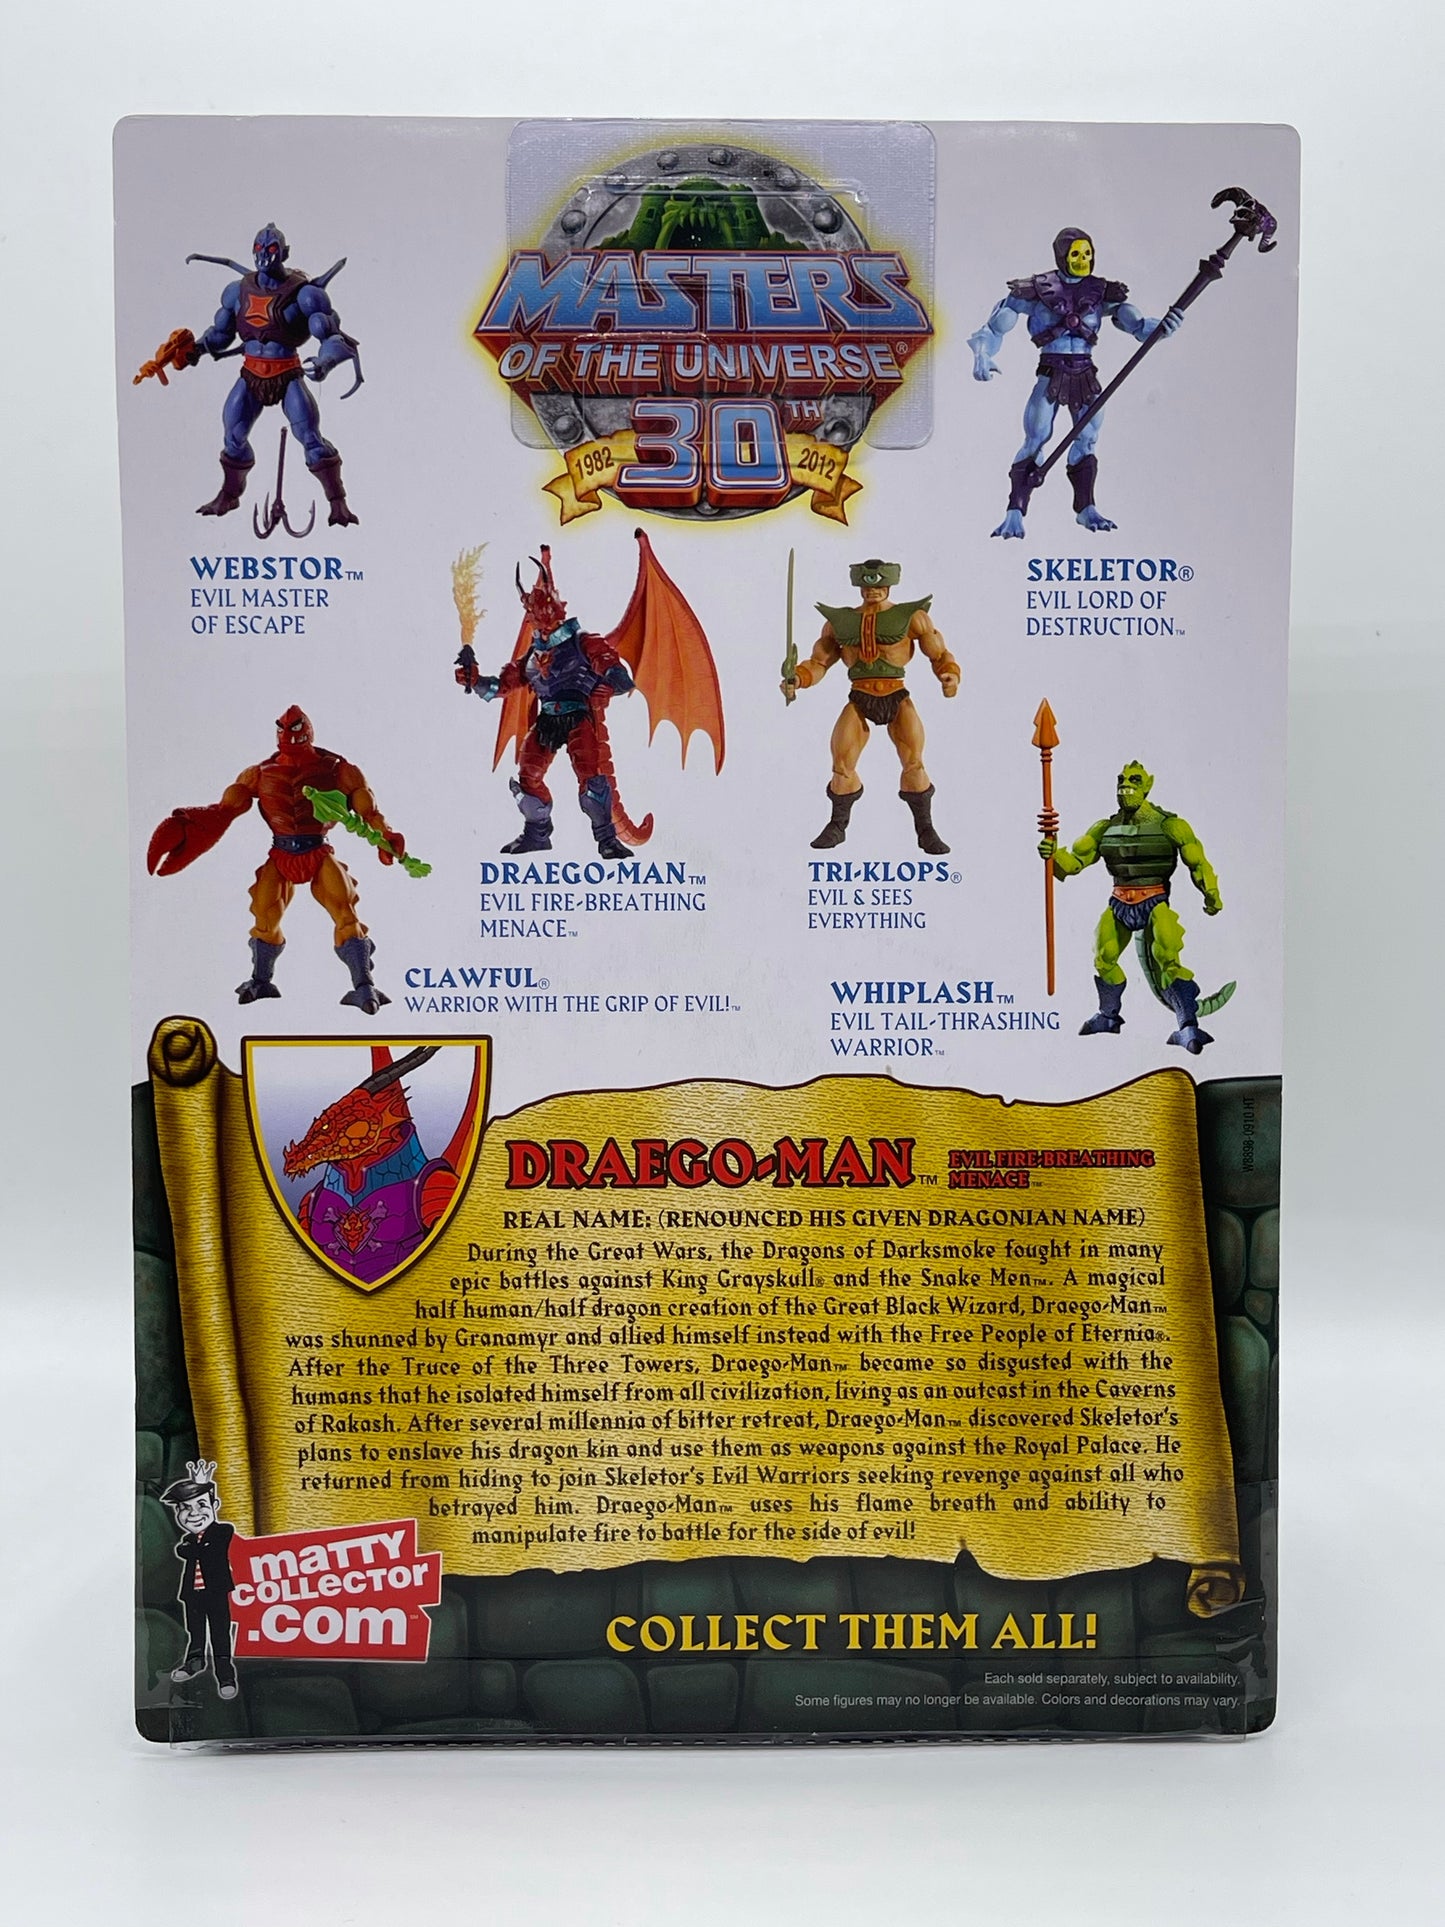 Masters of the Universe Classics Draego-man